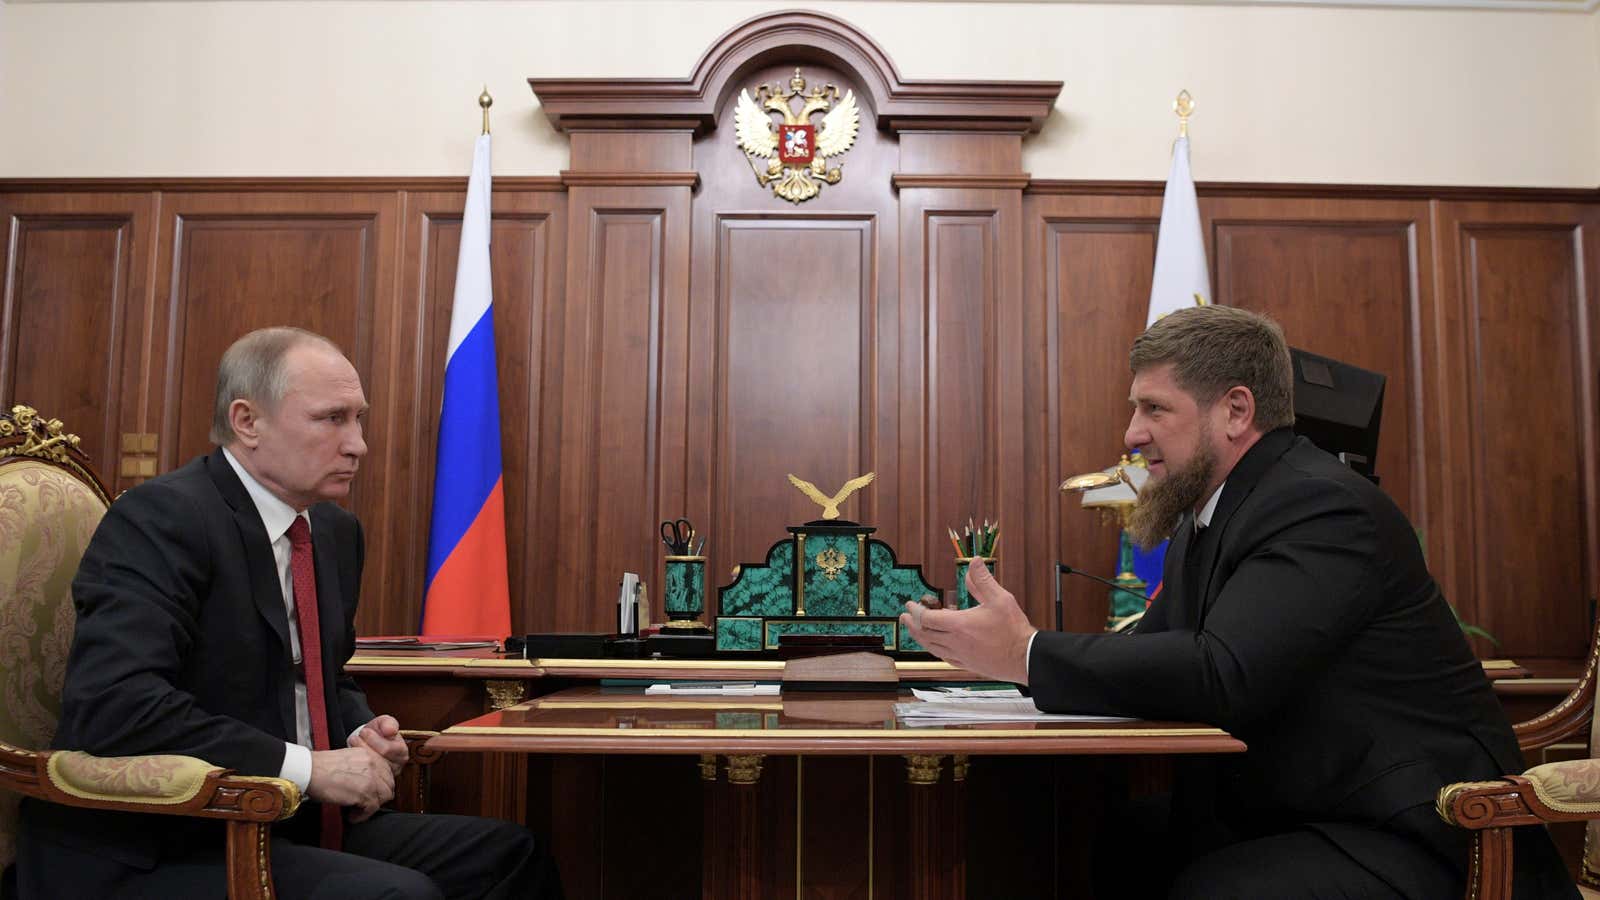 Kadyrov (right) is a close ally of president Vladimir Putin